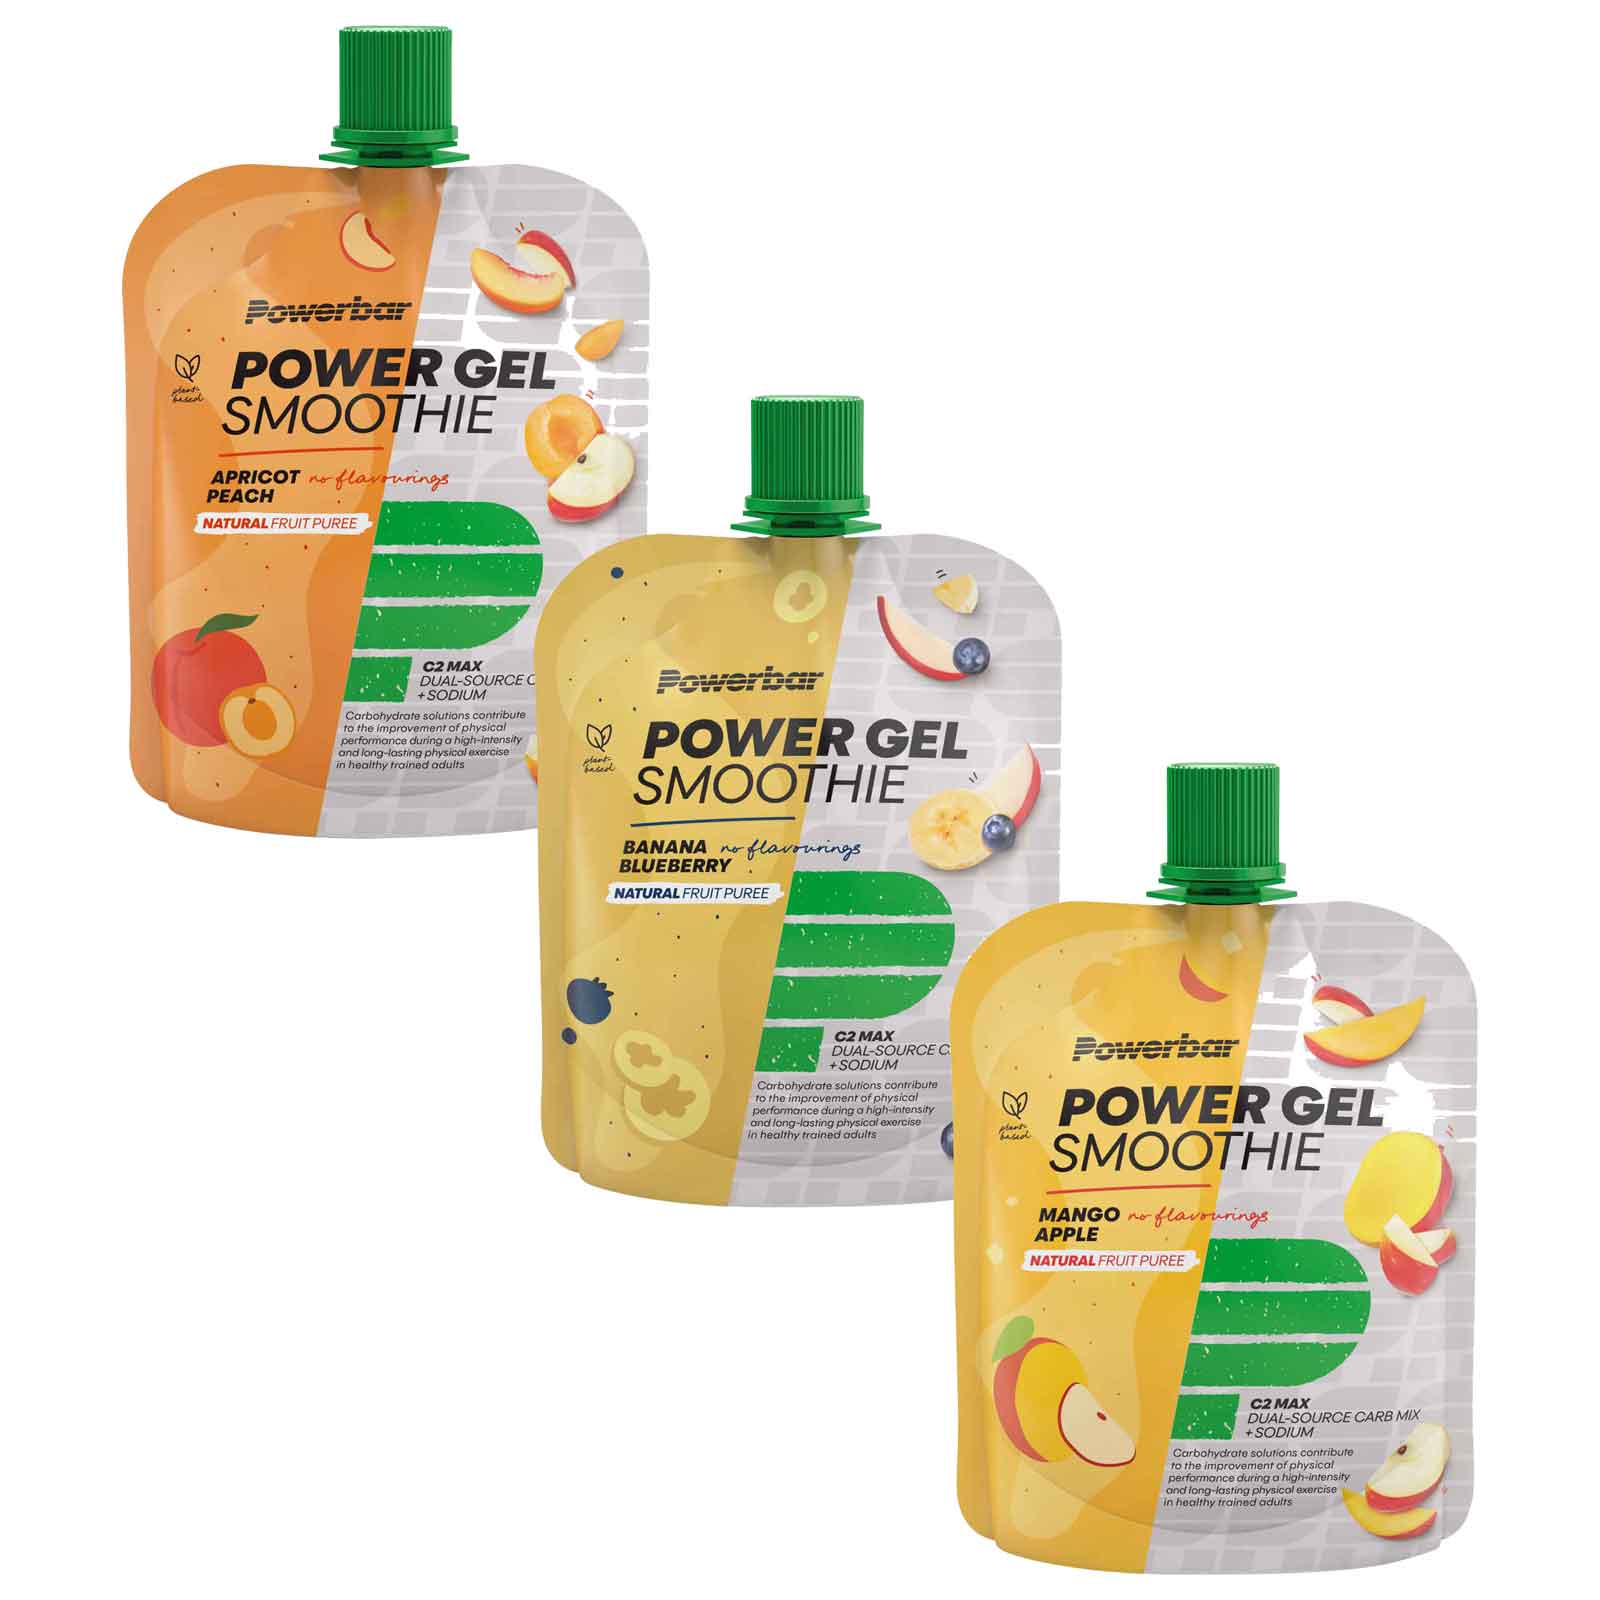 Productfoto van Powerbar PowerGel Smoothie - Vruchtenpuree met Koolhydraten - 90g